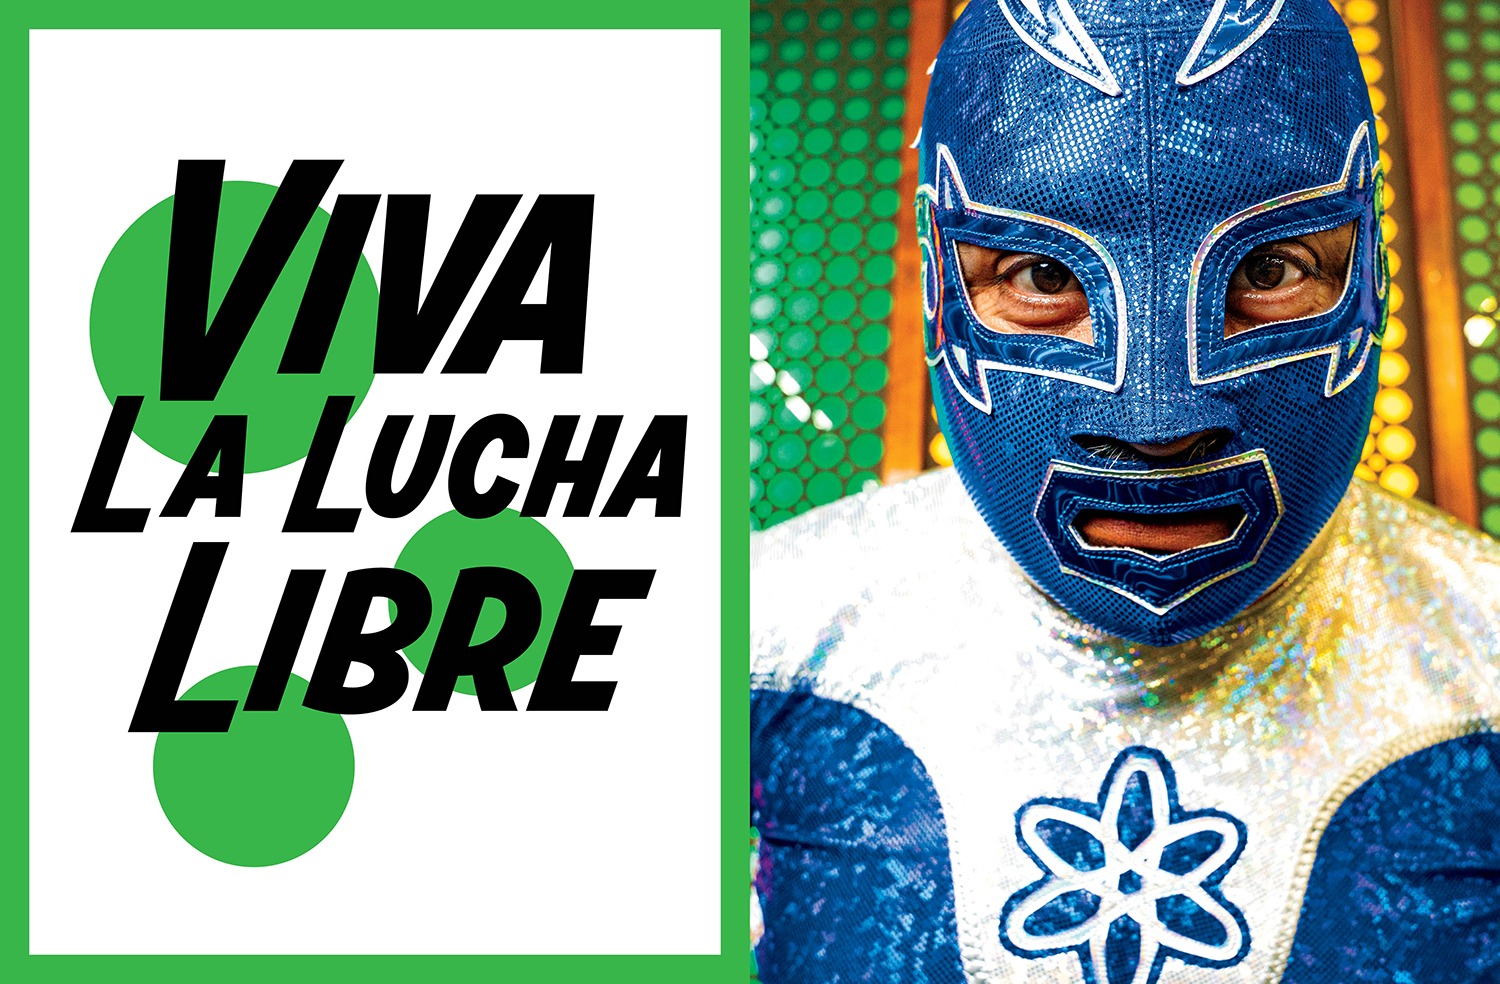 “Viva la Lucha Libre” topper, featuring luchador Atomico